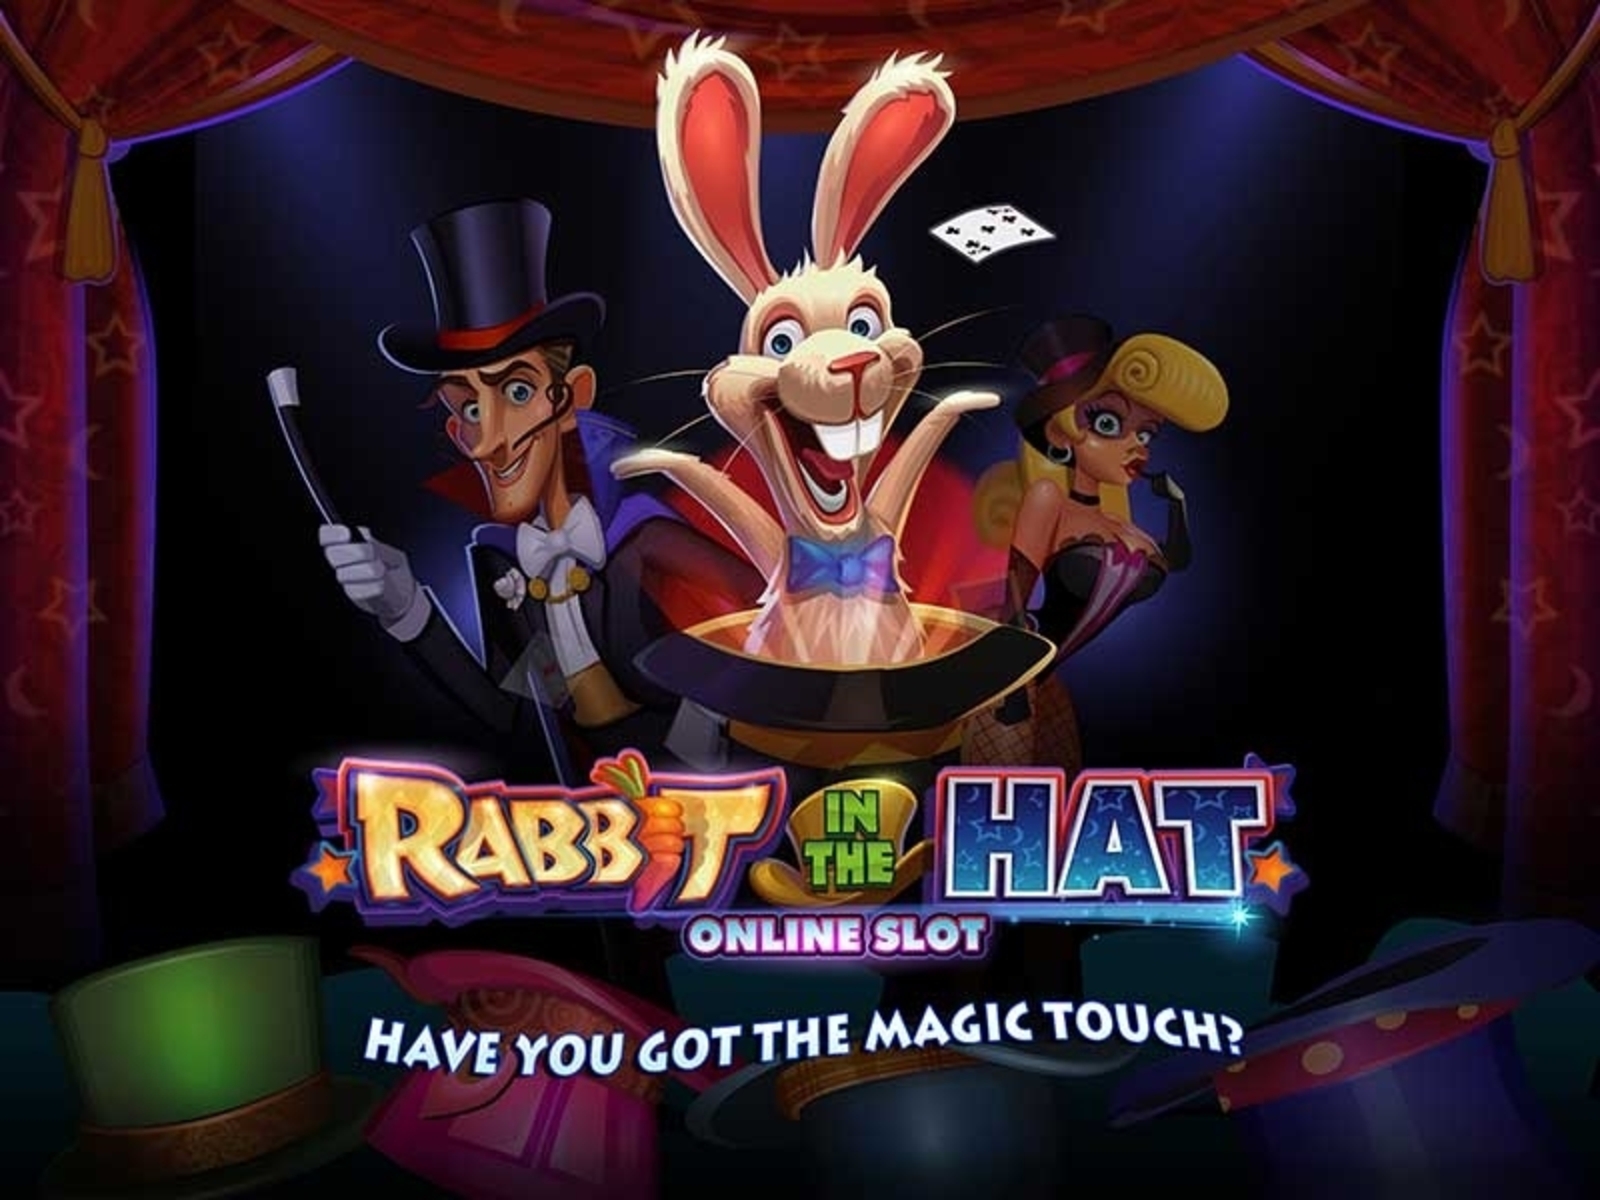 Rabbit In The Hat demo